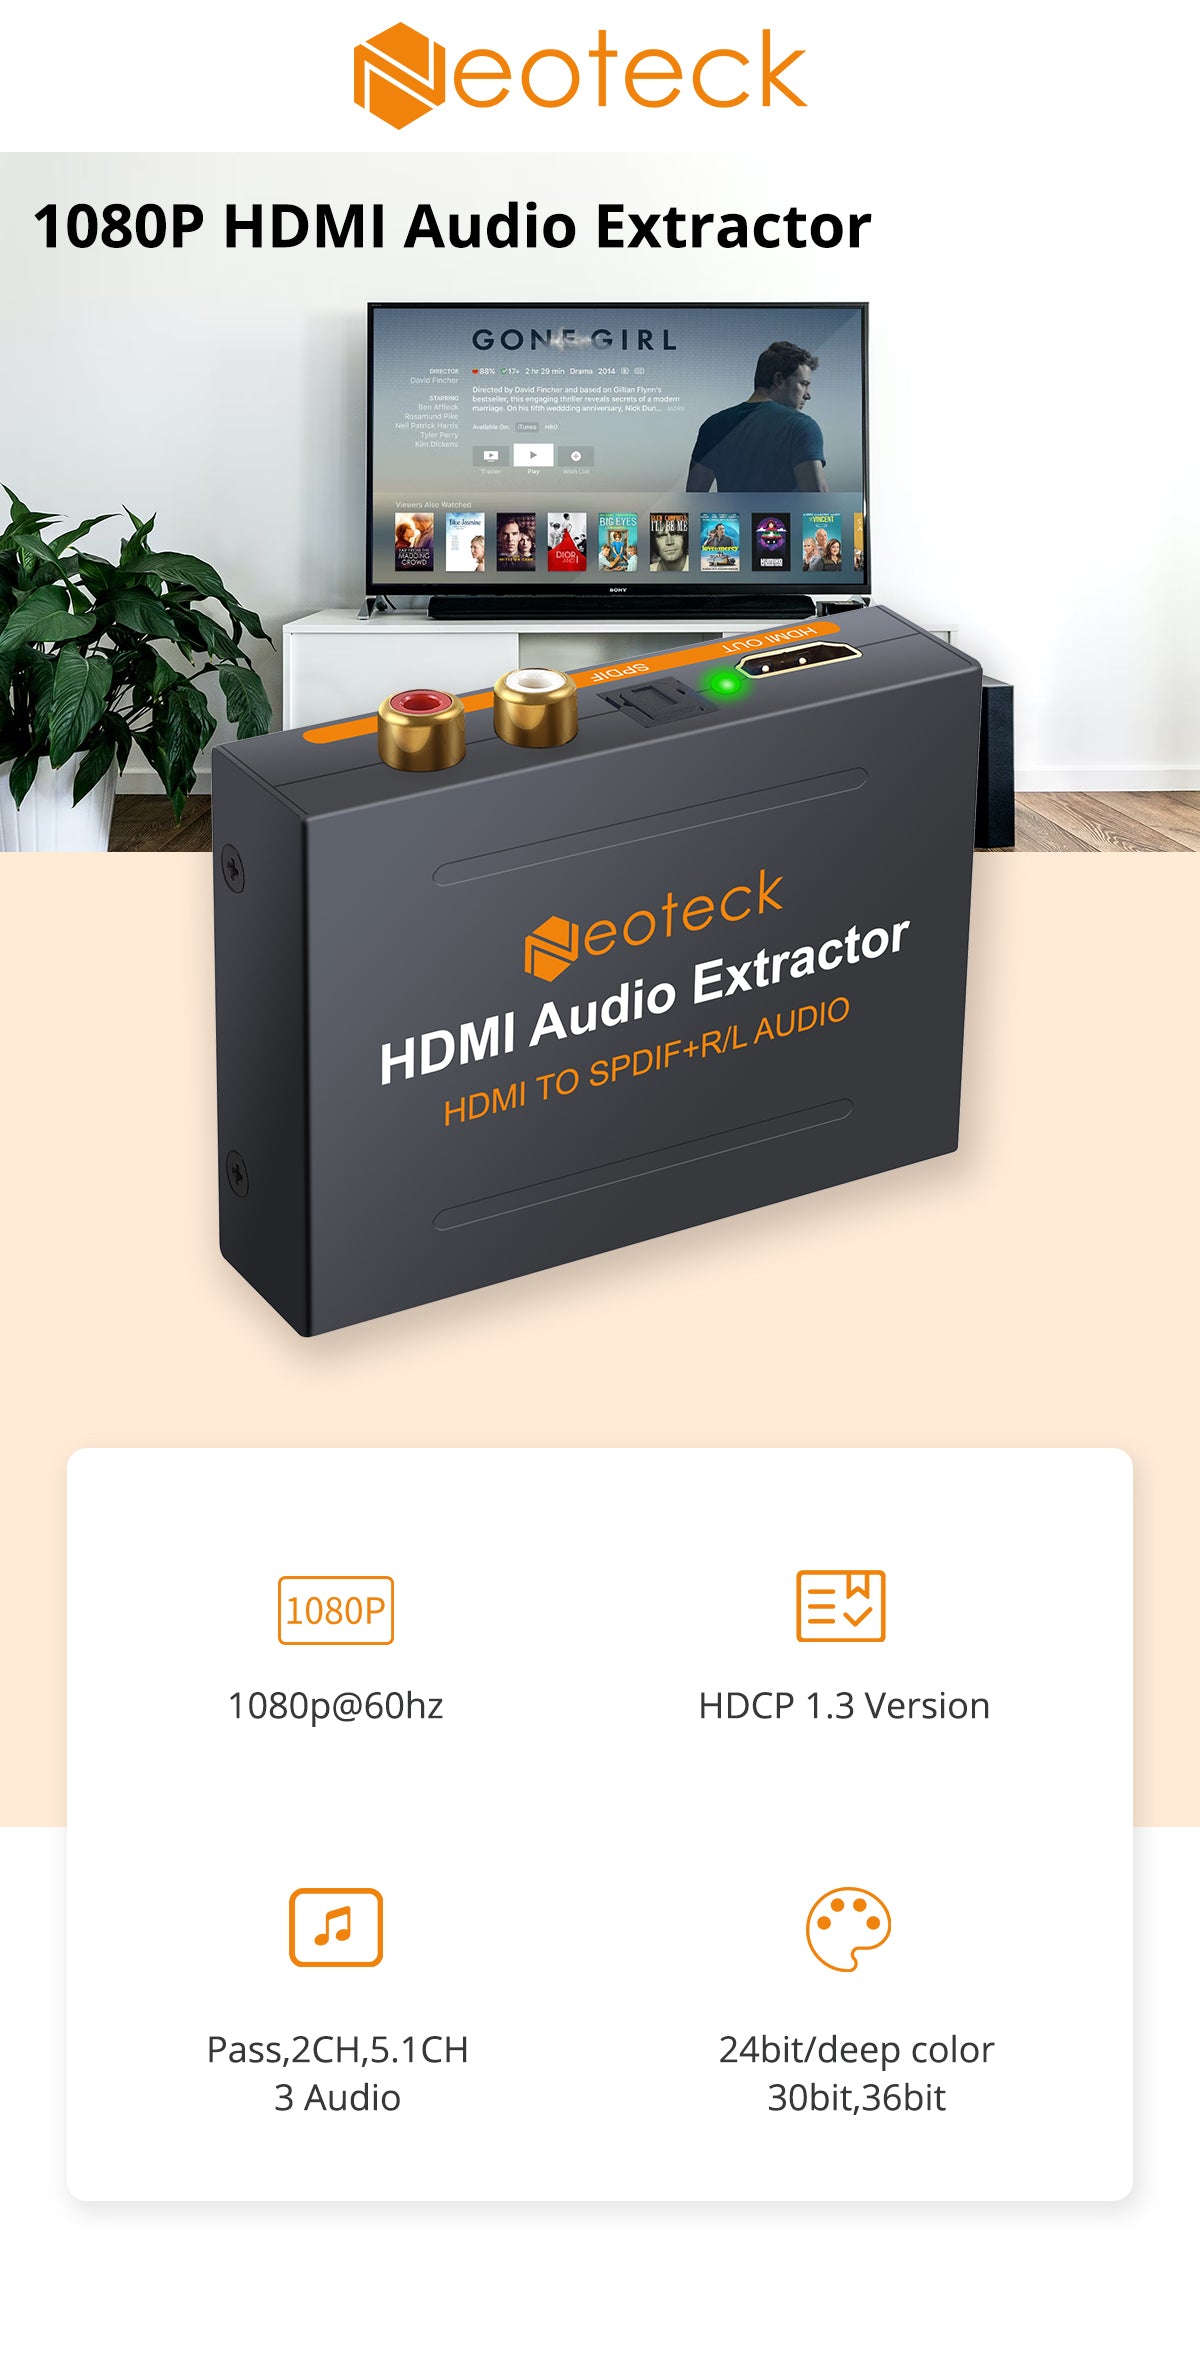 Neoteck 1080P HDMI Audio Extractor